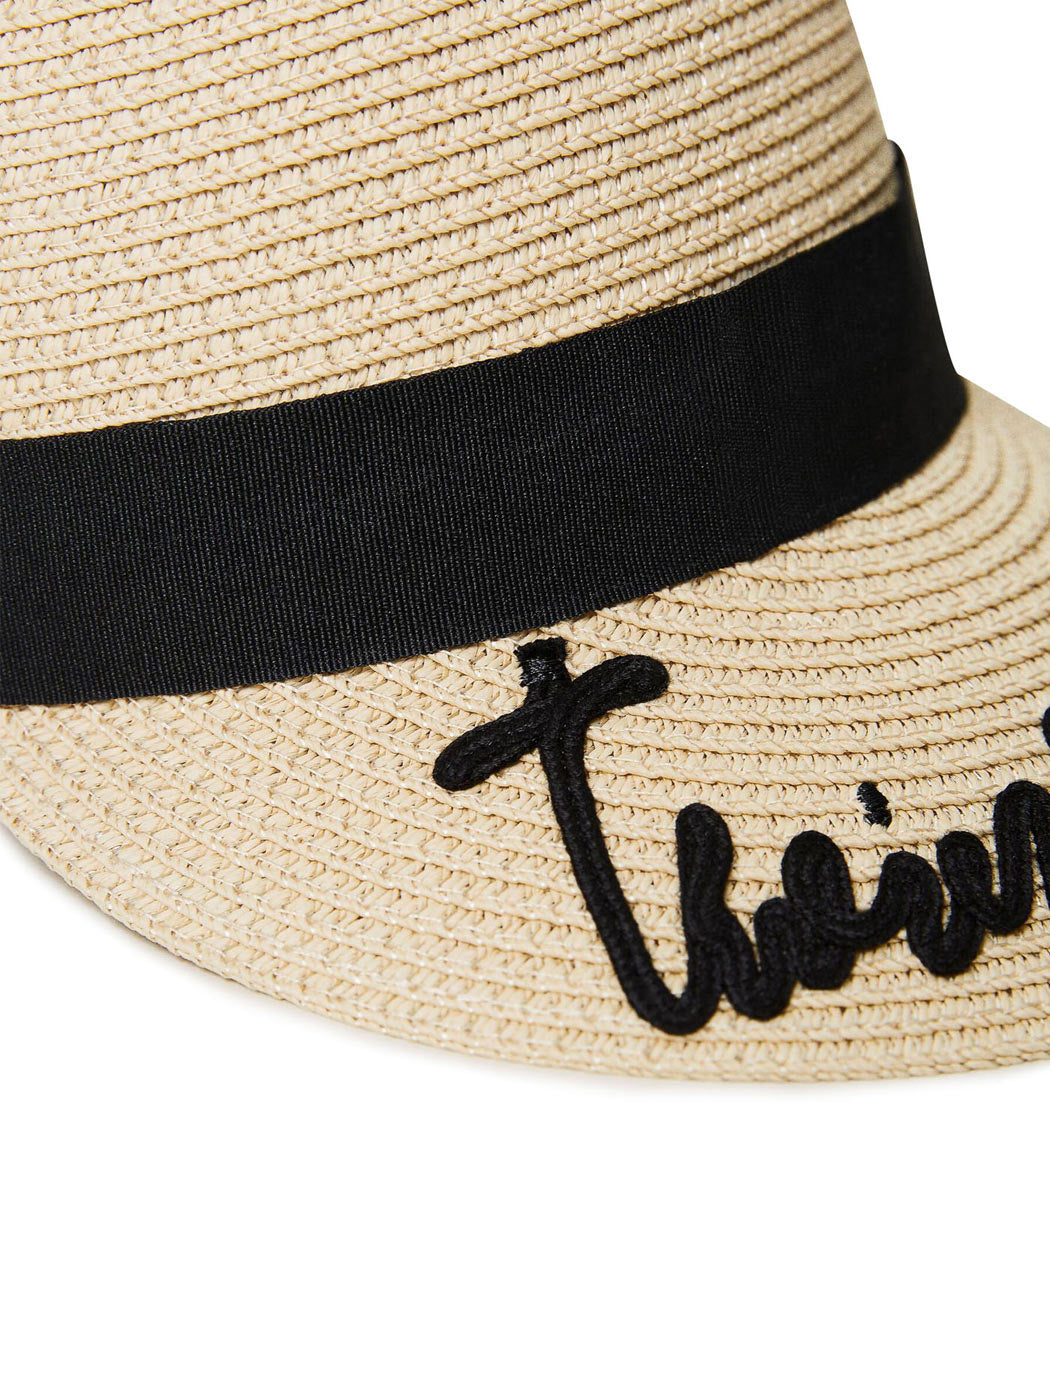 TWINSET Girl's Straw hat with logo - 231GJ4760 Beige